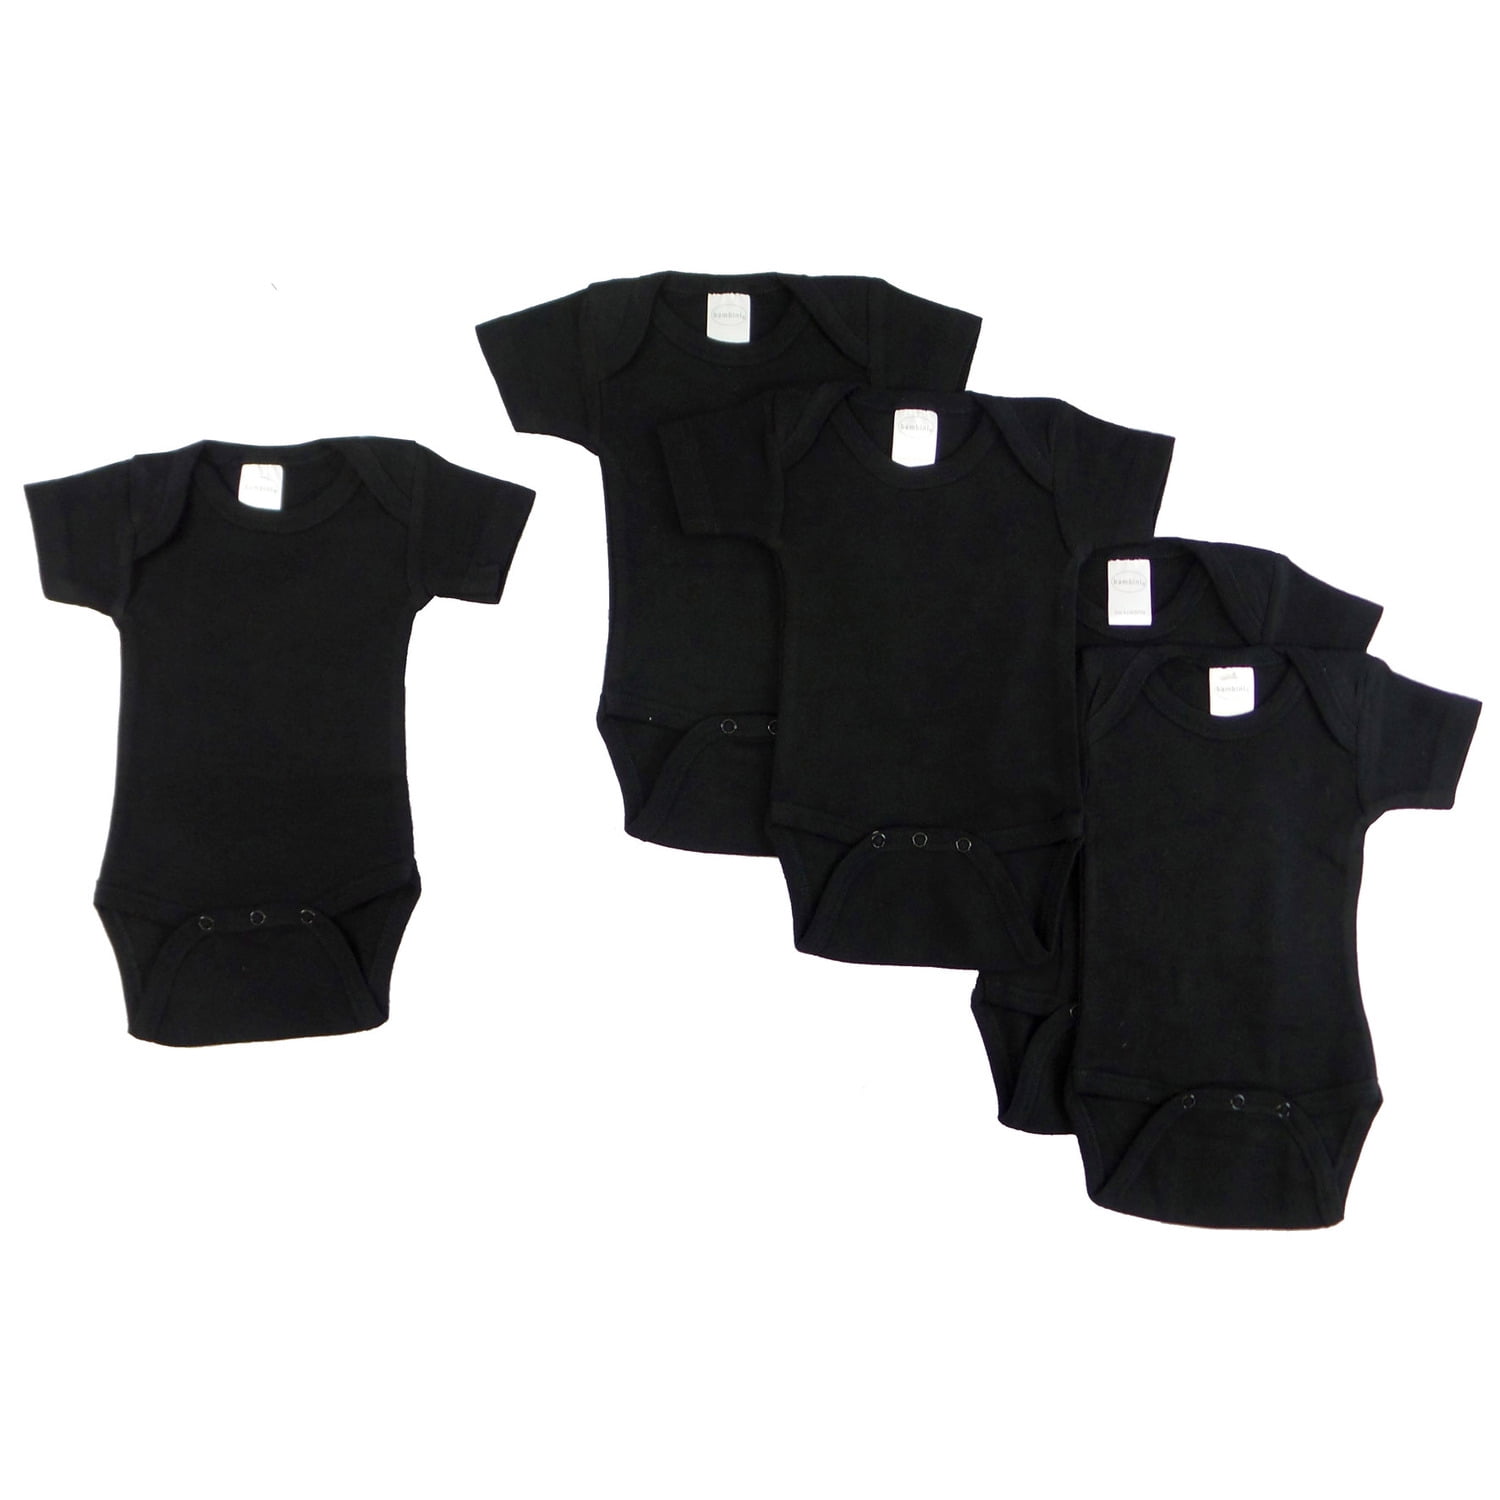 Short Sleeve - Black, Large - Pack Of 5